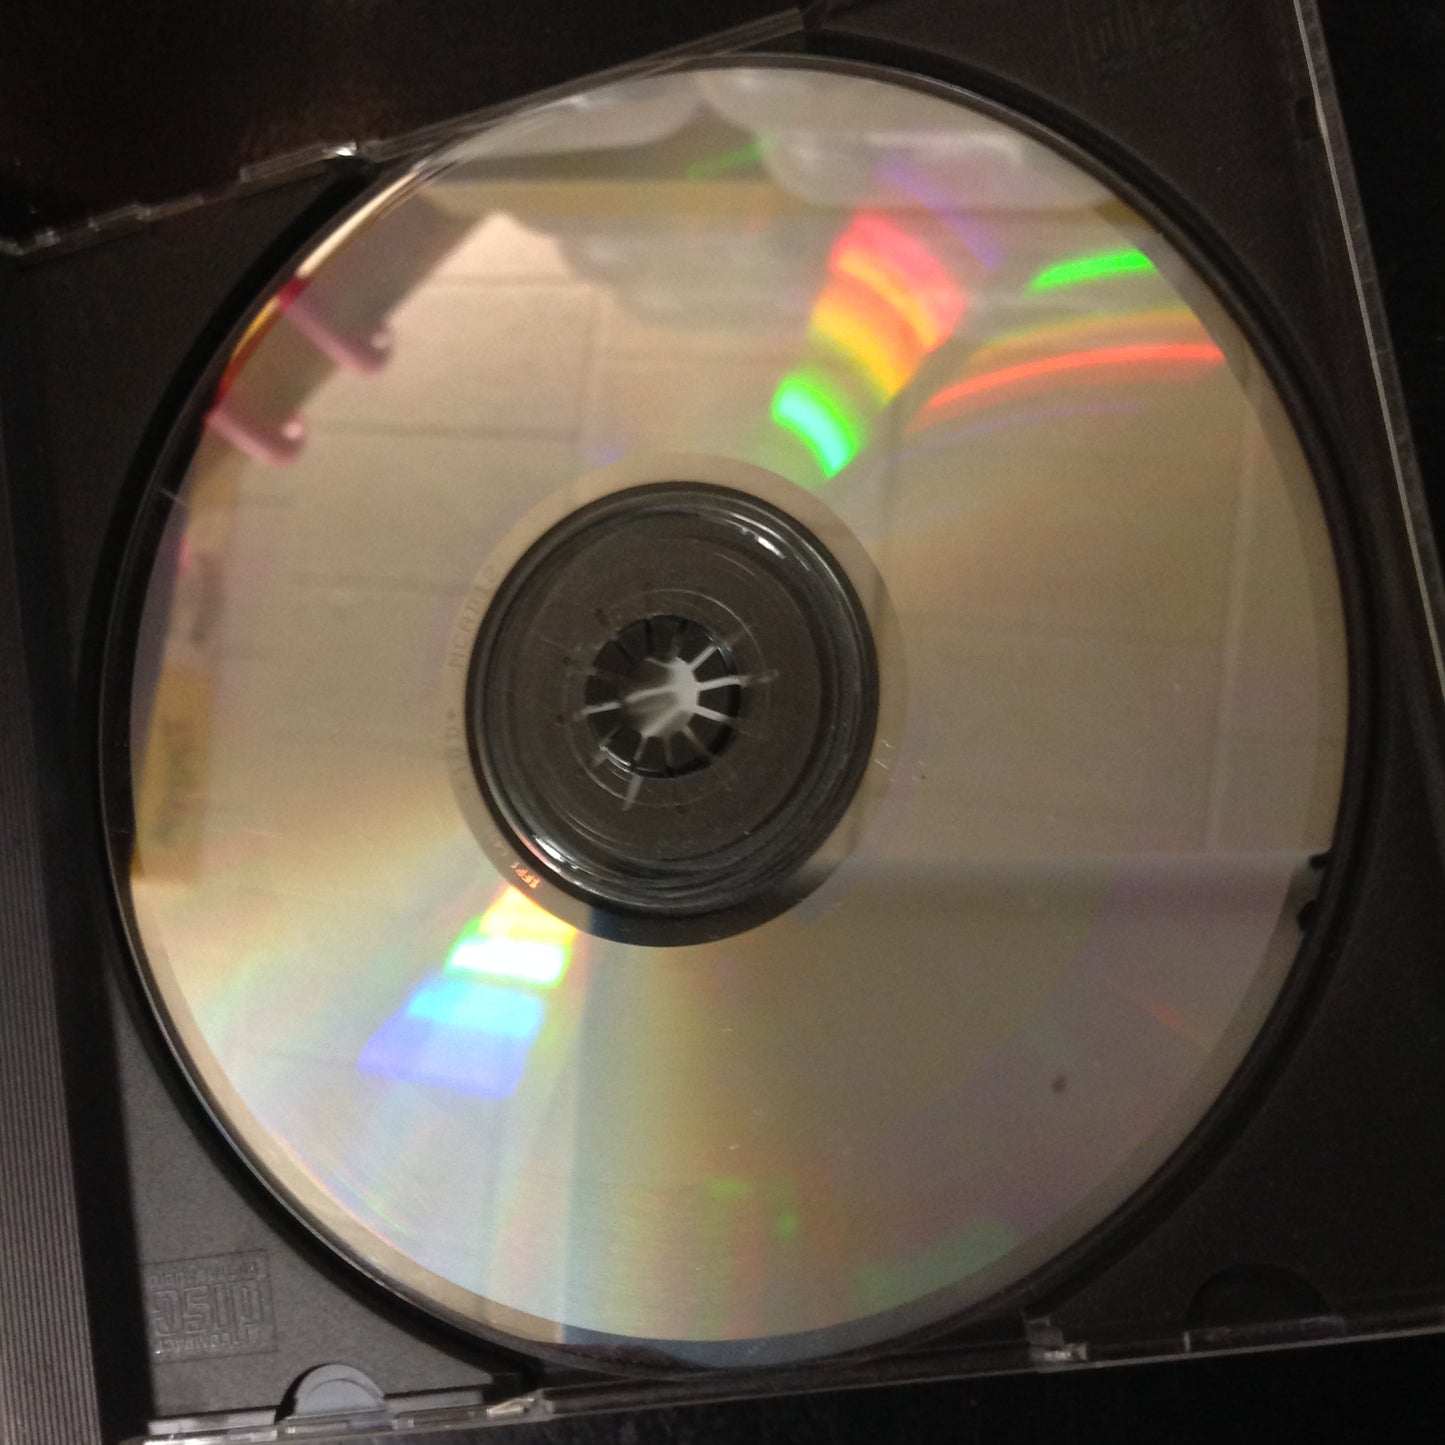 CD Patsy Cline 12 Greatest Hits Country MCAD-12 Pop Folk World Rock